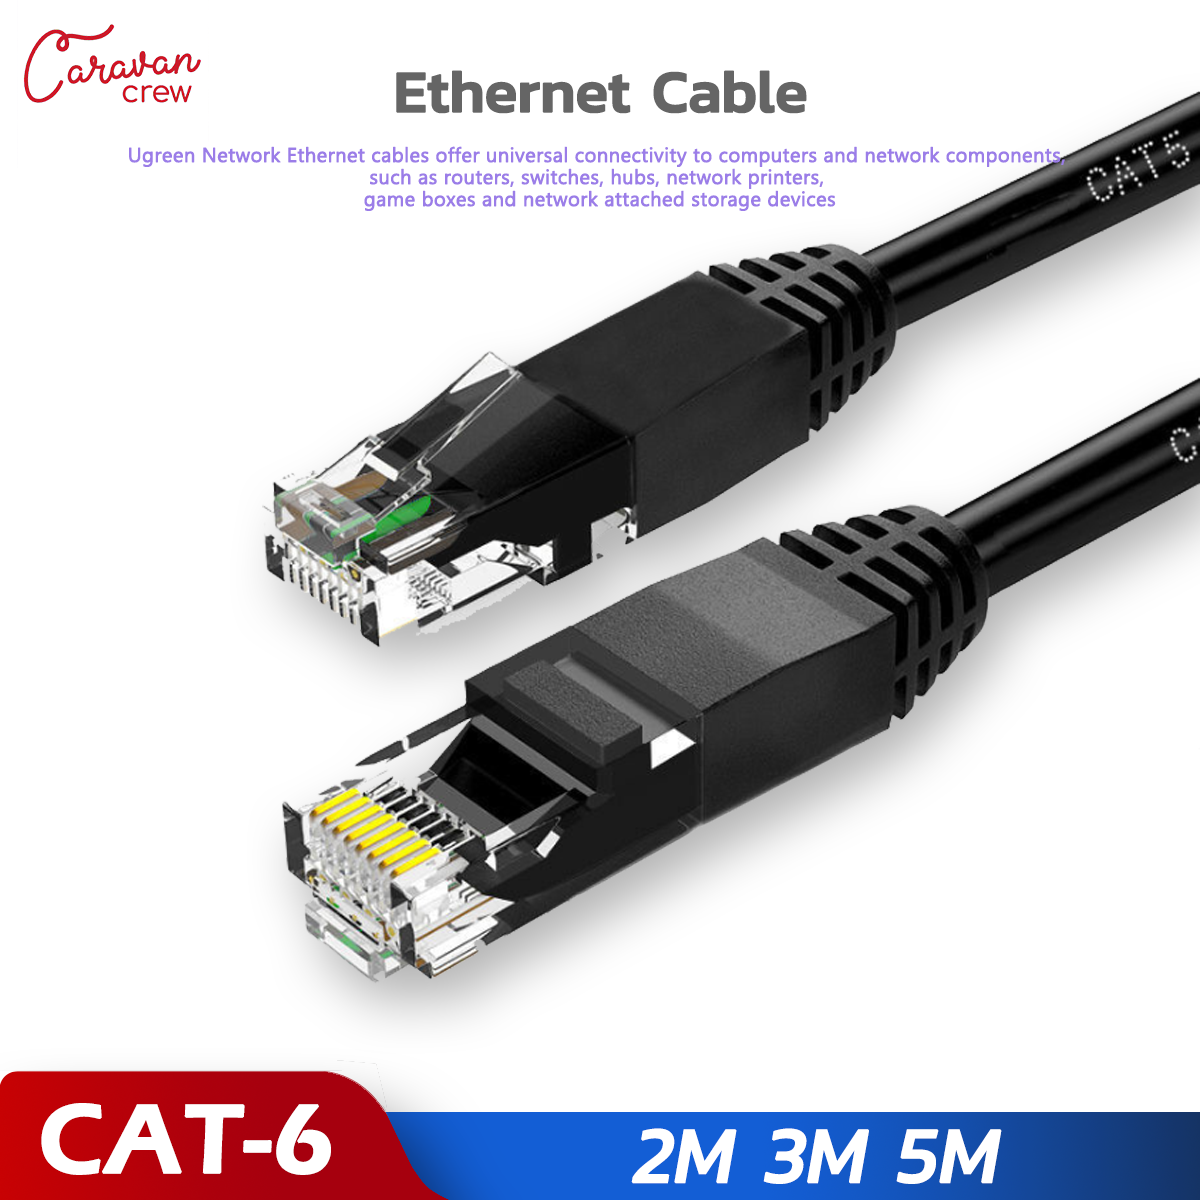 Cables Open-Smart Flat Cable Ethernet Network Internet LAN Patch Cord CAT7E Laptop RJ45 Connector 0.5/1/2/3/5/8/10/15/20m Cable Length: 8m 